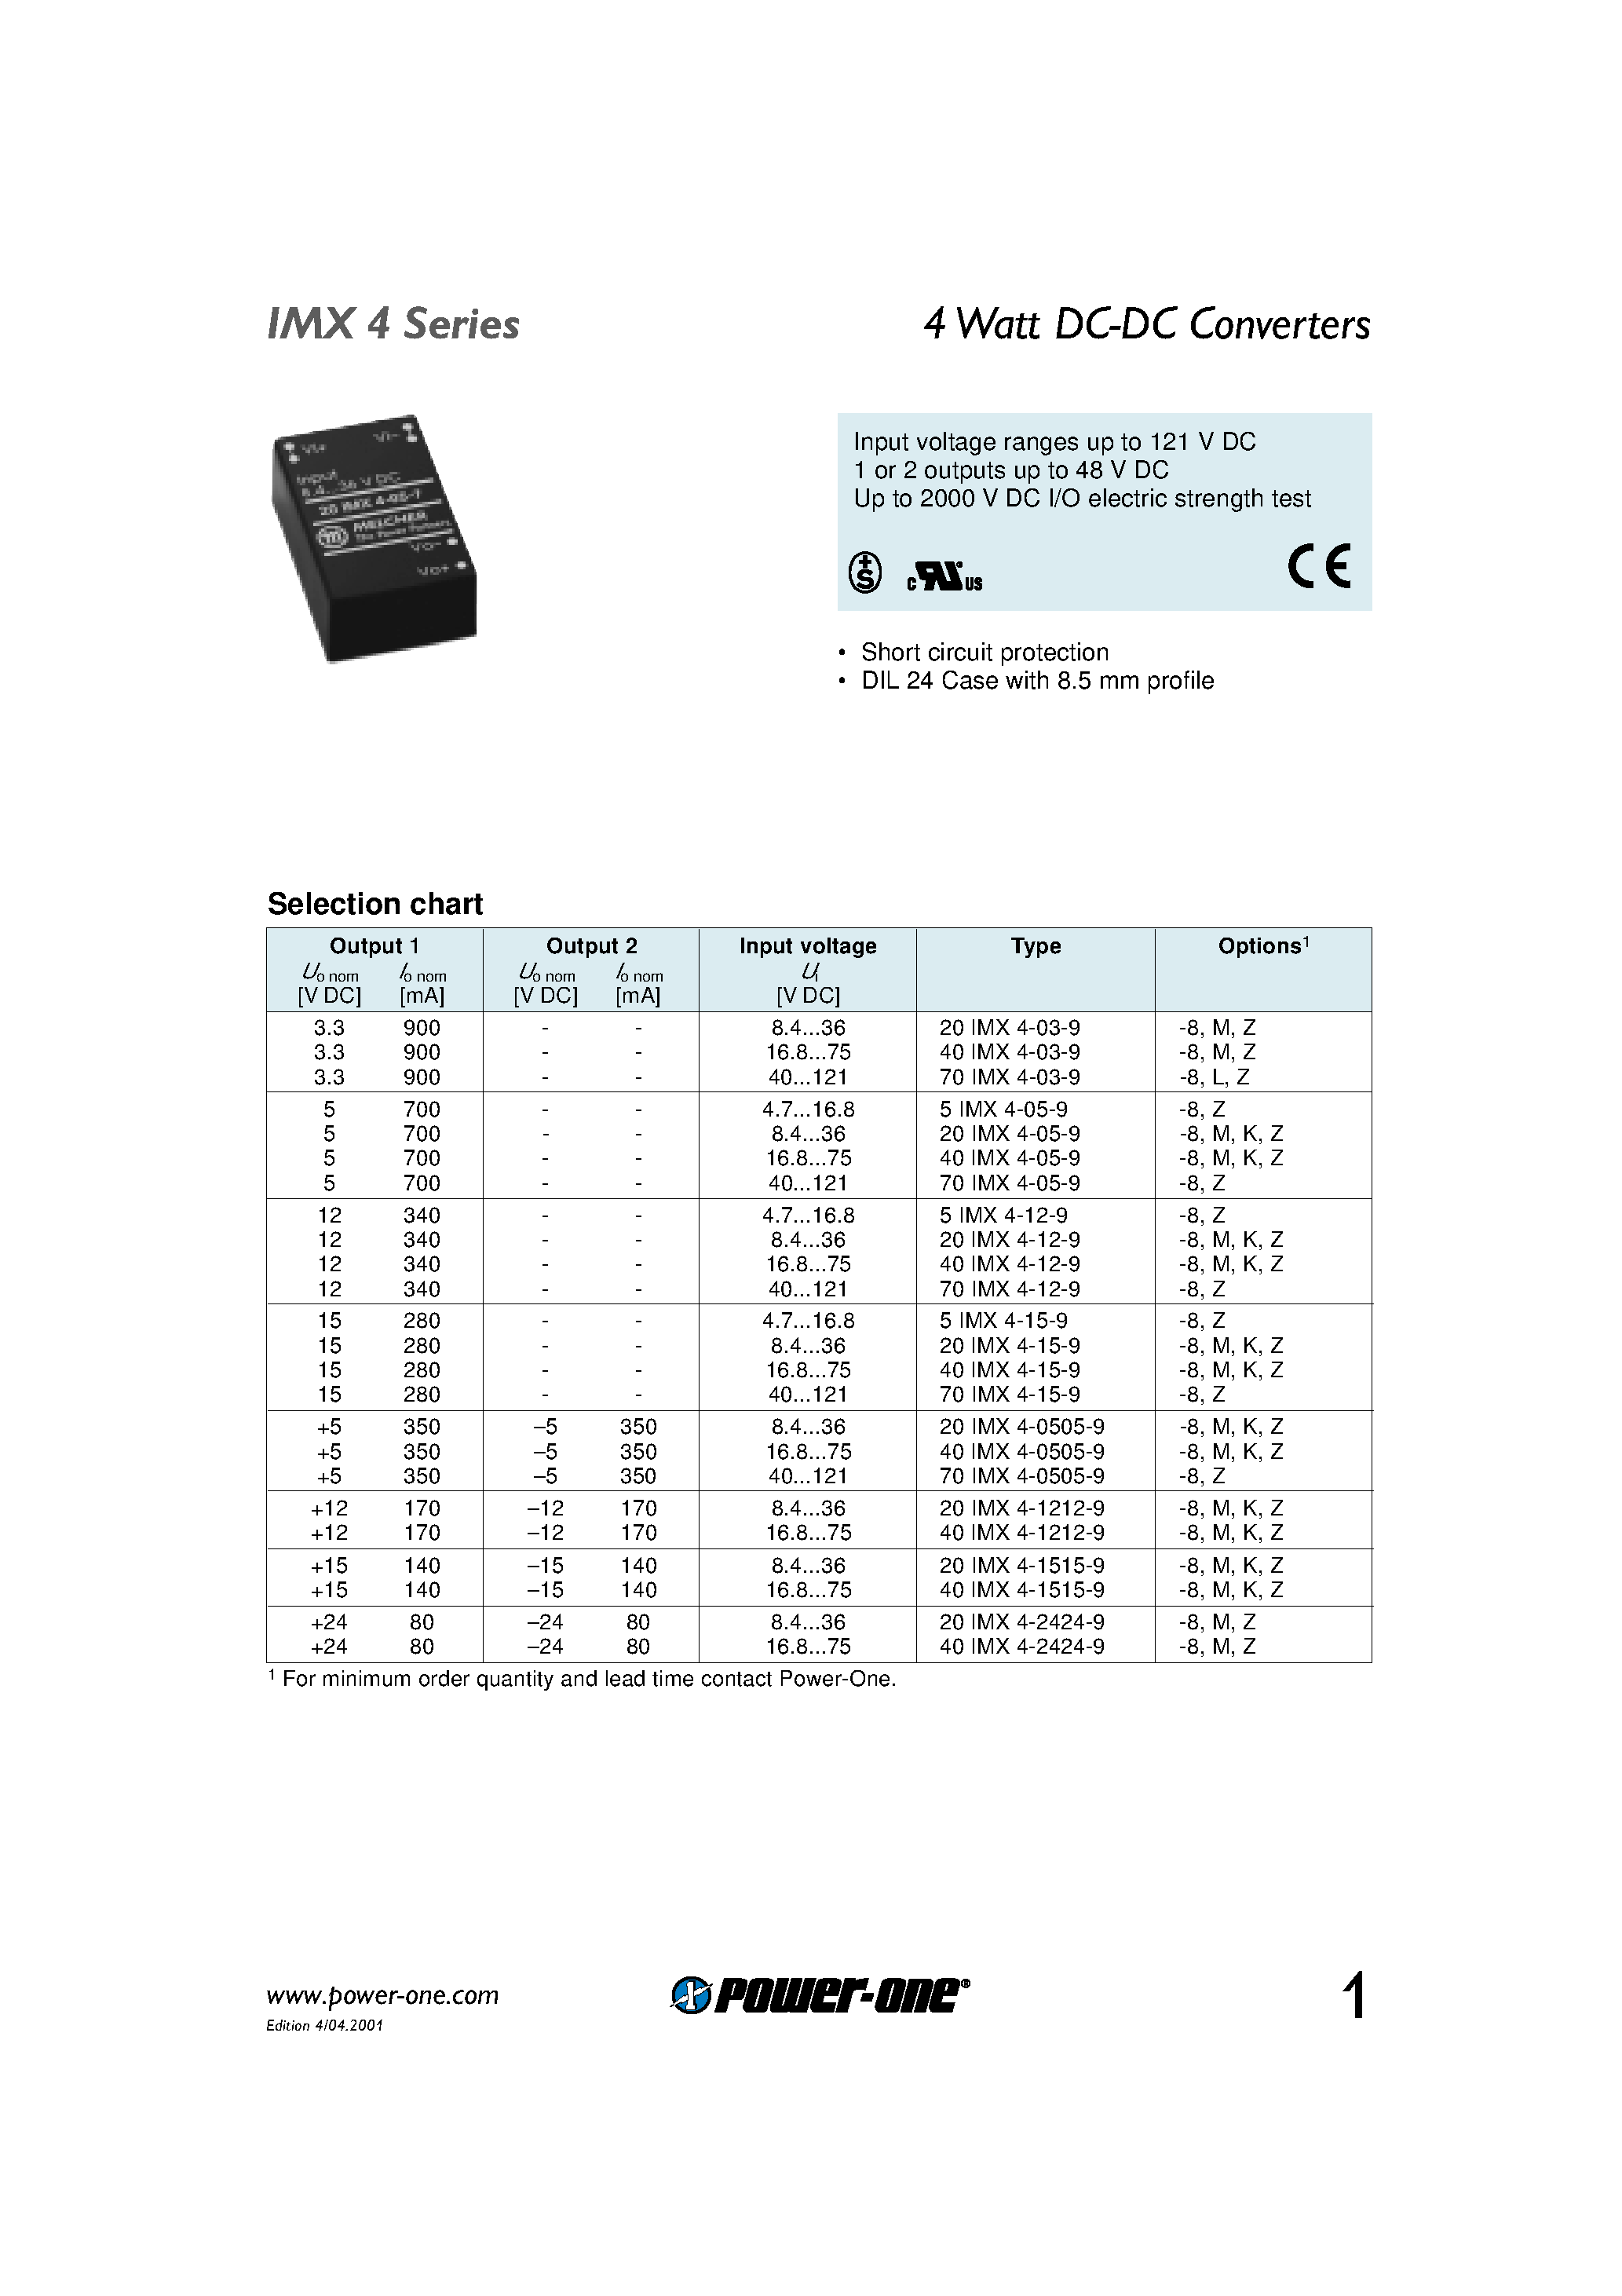 Даташит 40IMX4-03-9 - 4 Watt DC-DC Converters страница 1